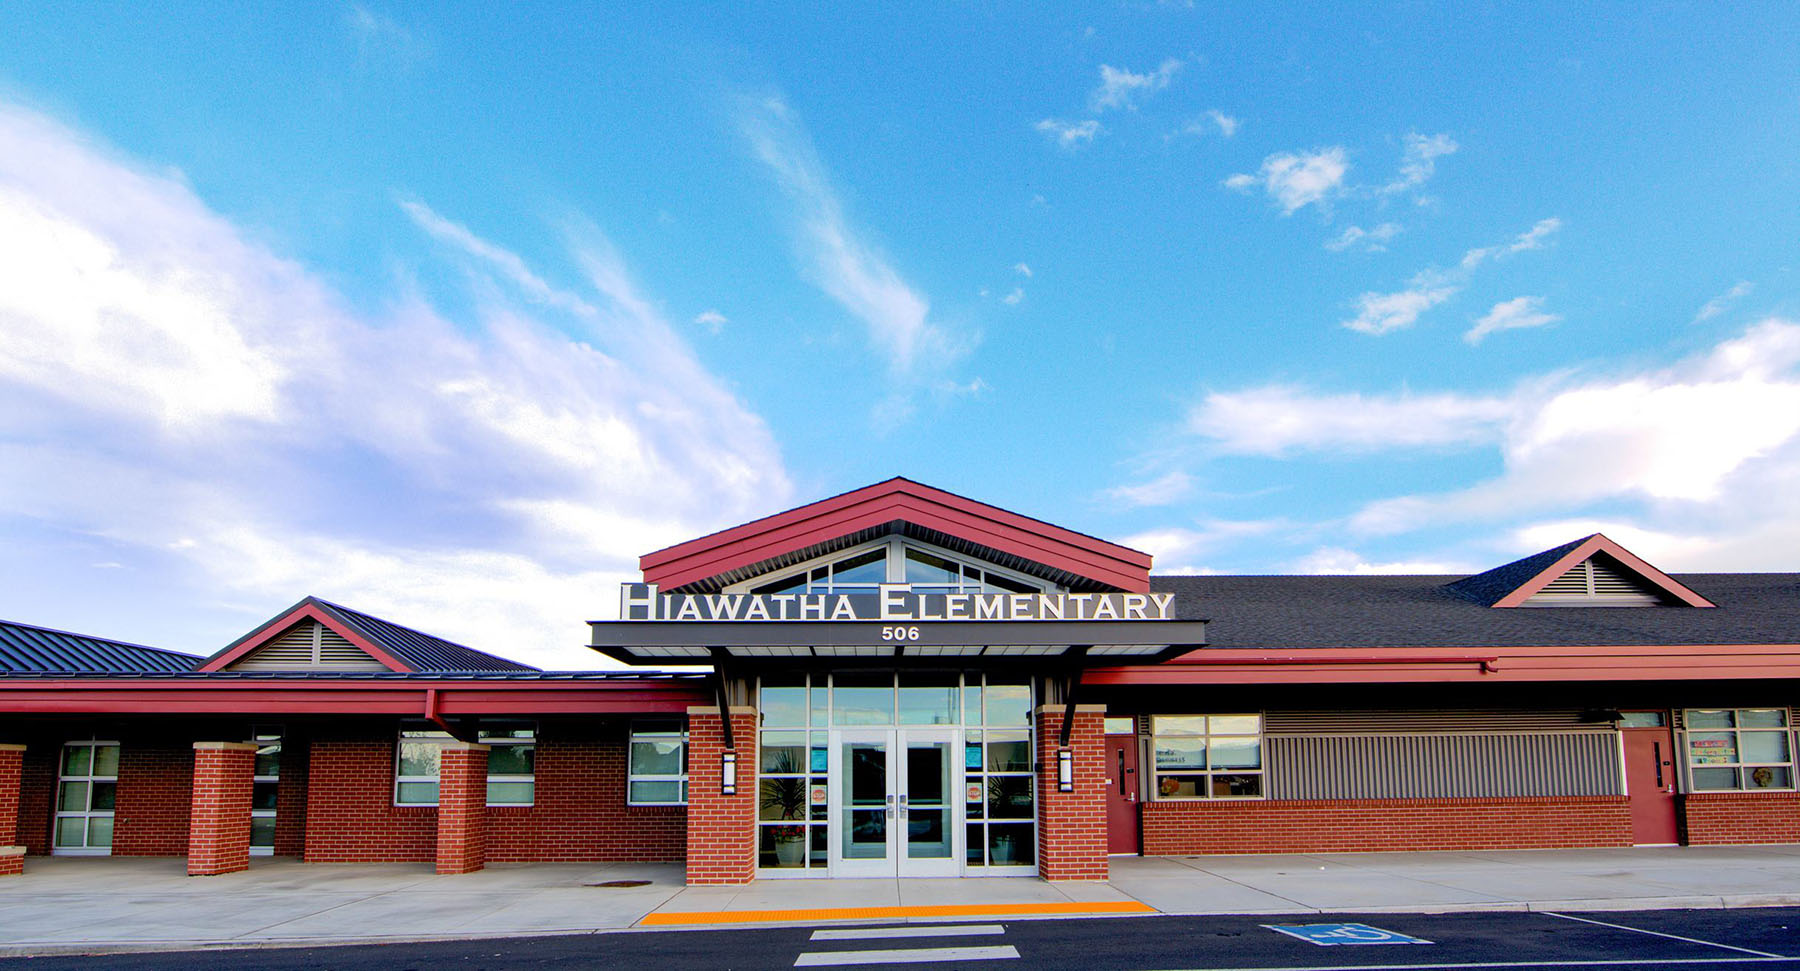 Hiawatha Elementary School - Exterior